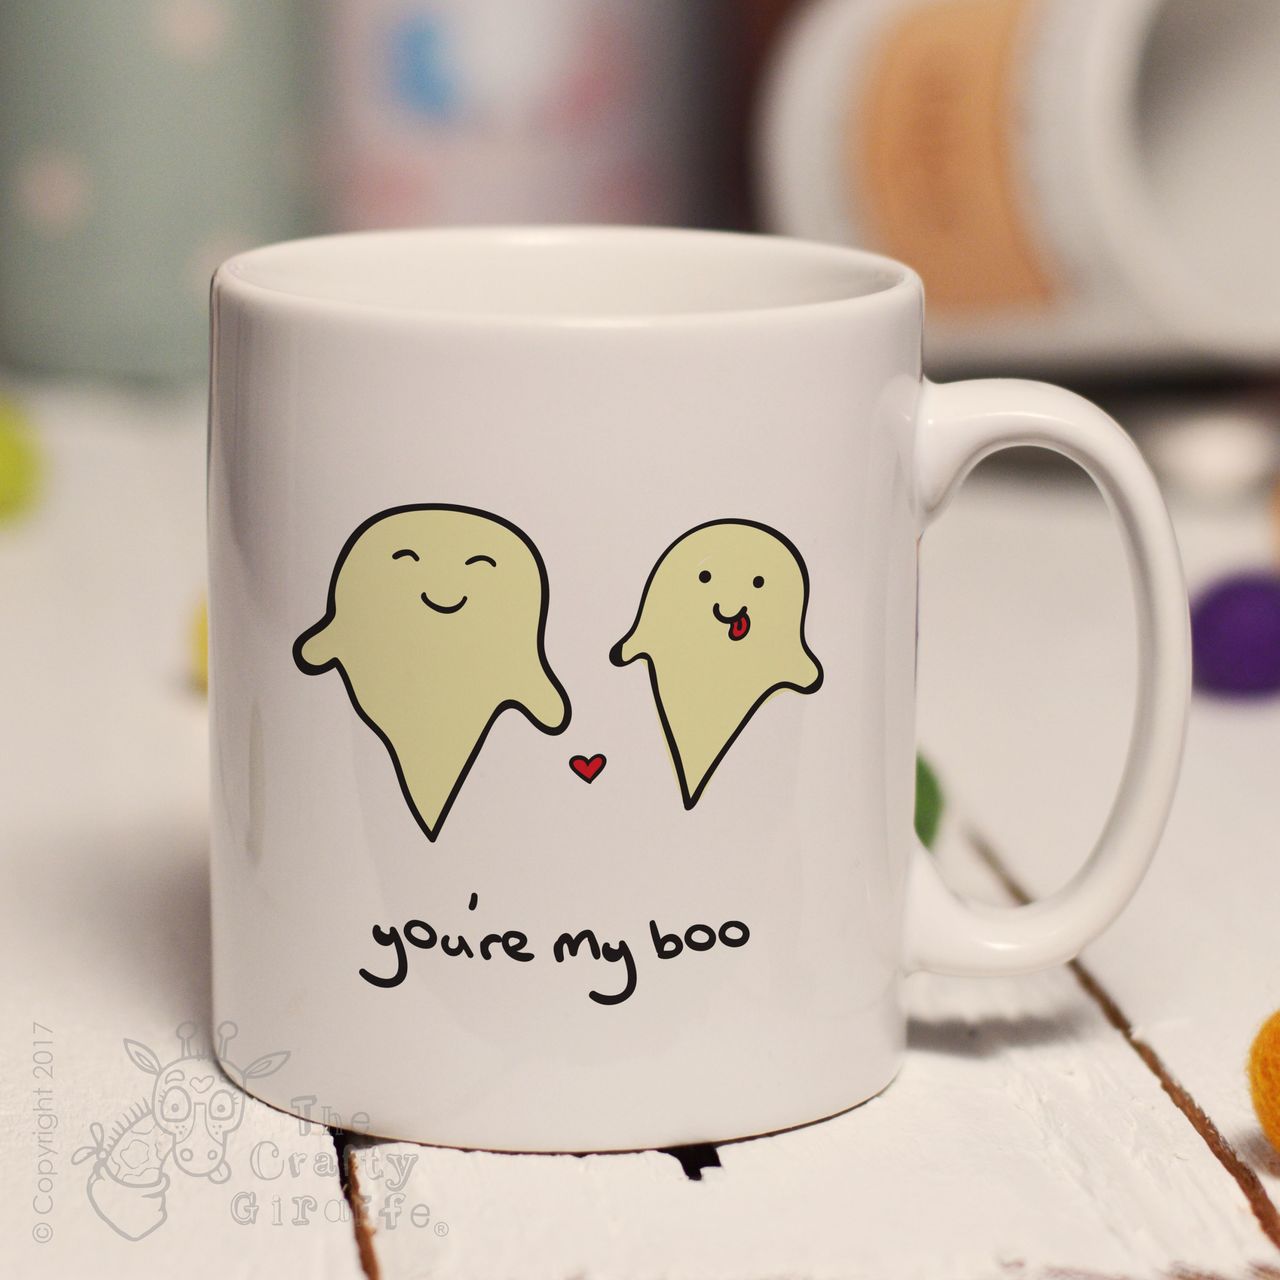 You’re my boo mug